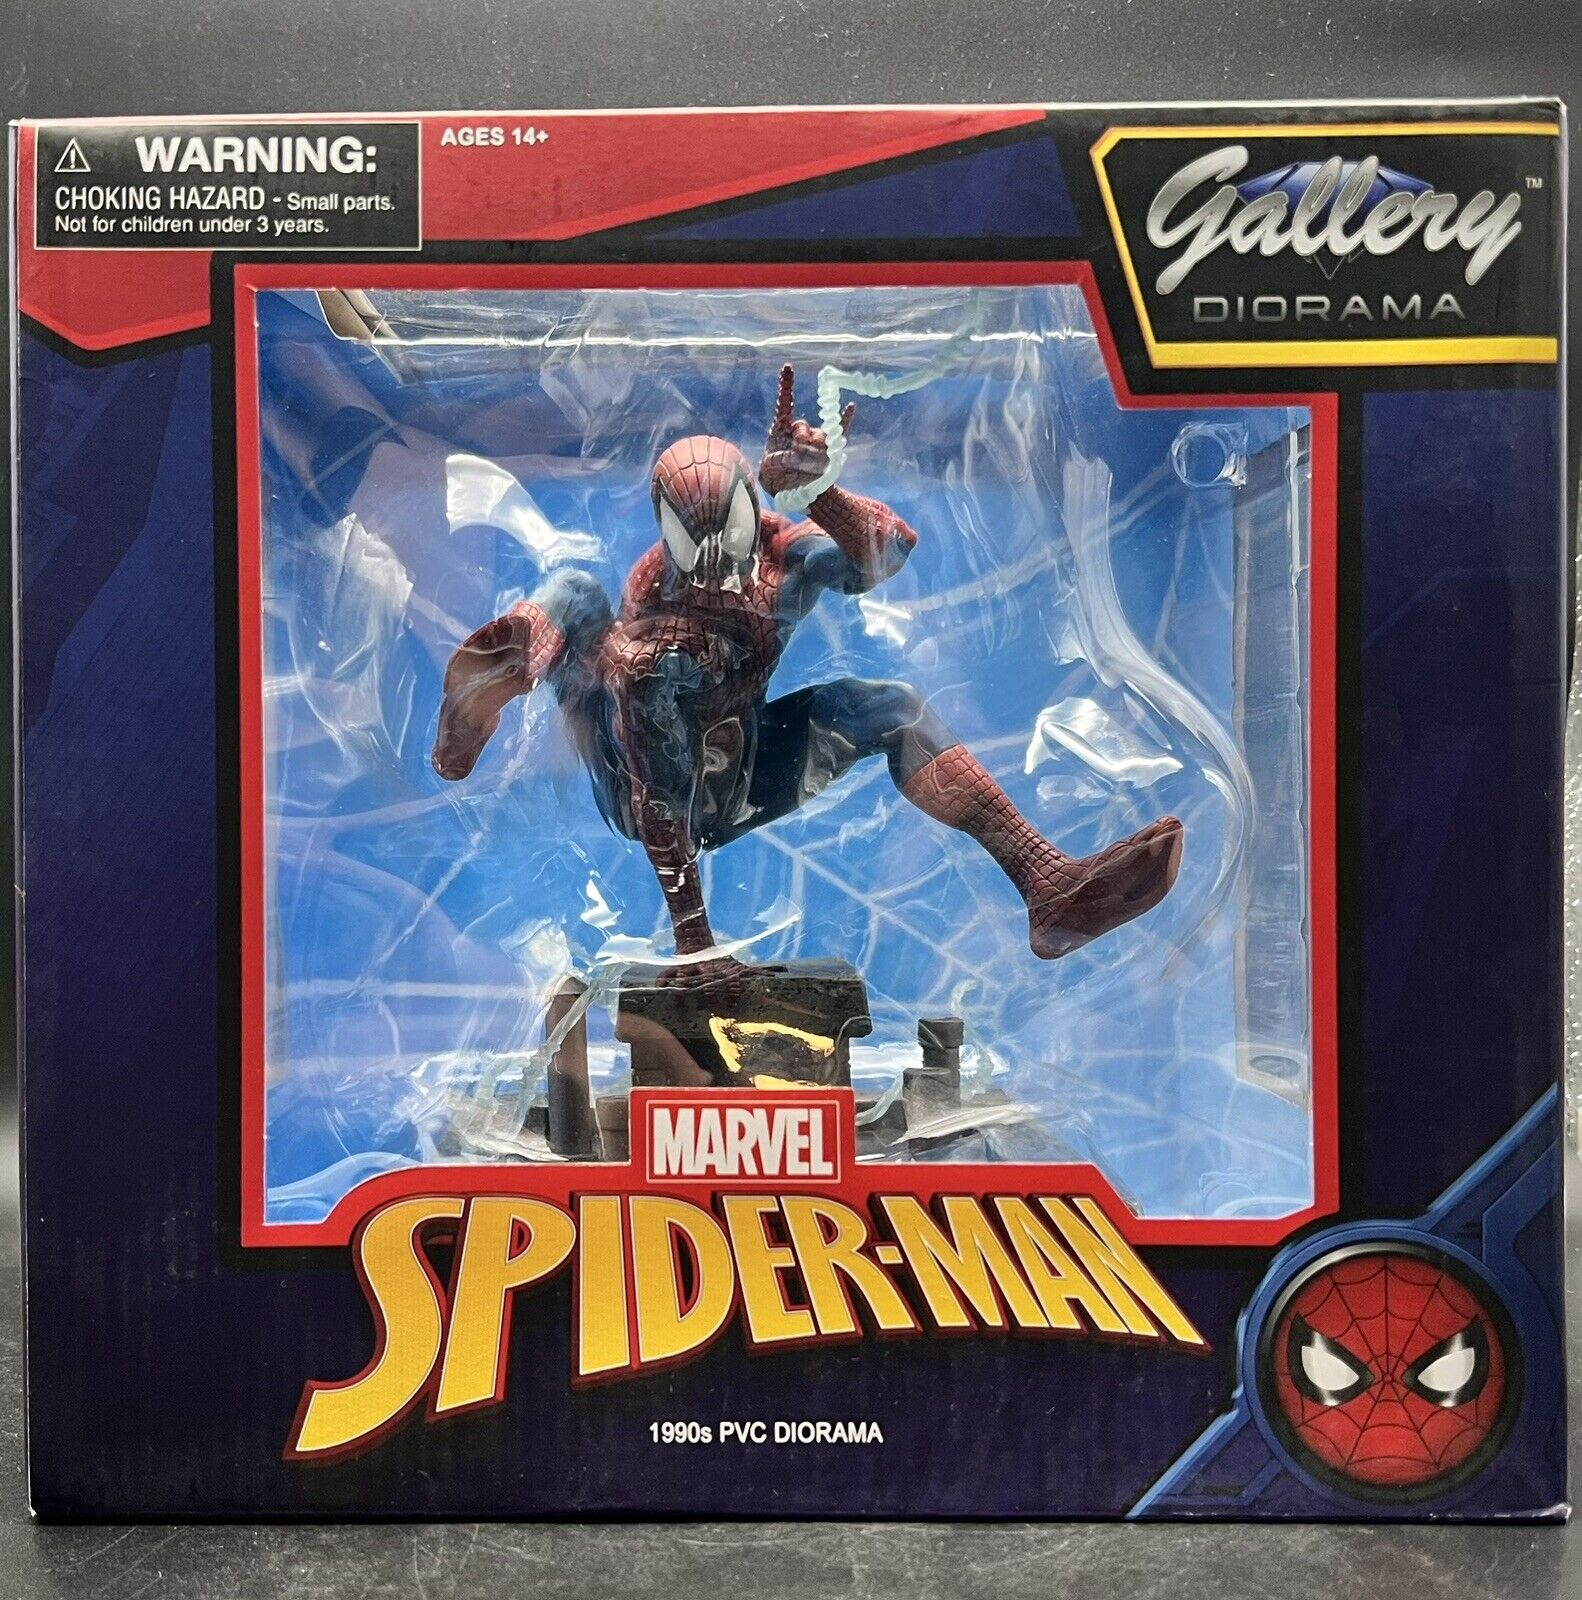 Spider-Man 1990s PV Diorama Diamond Gallery 2019 Sealed New in Box ASM